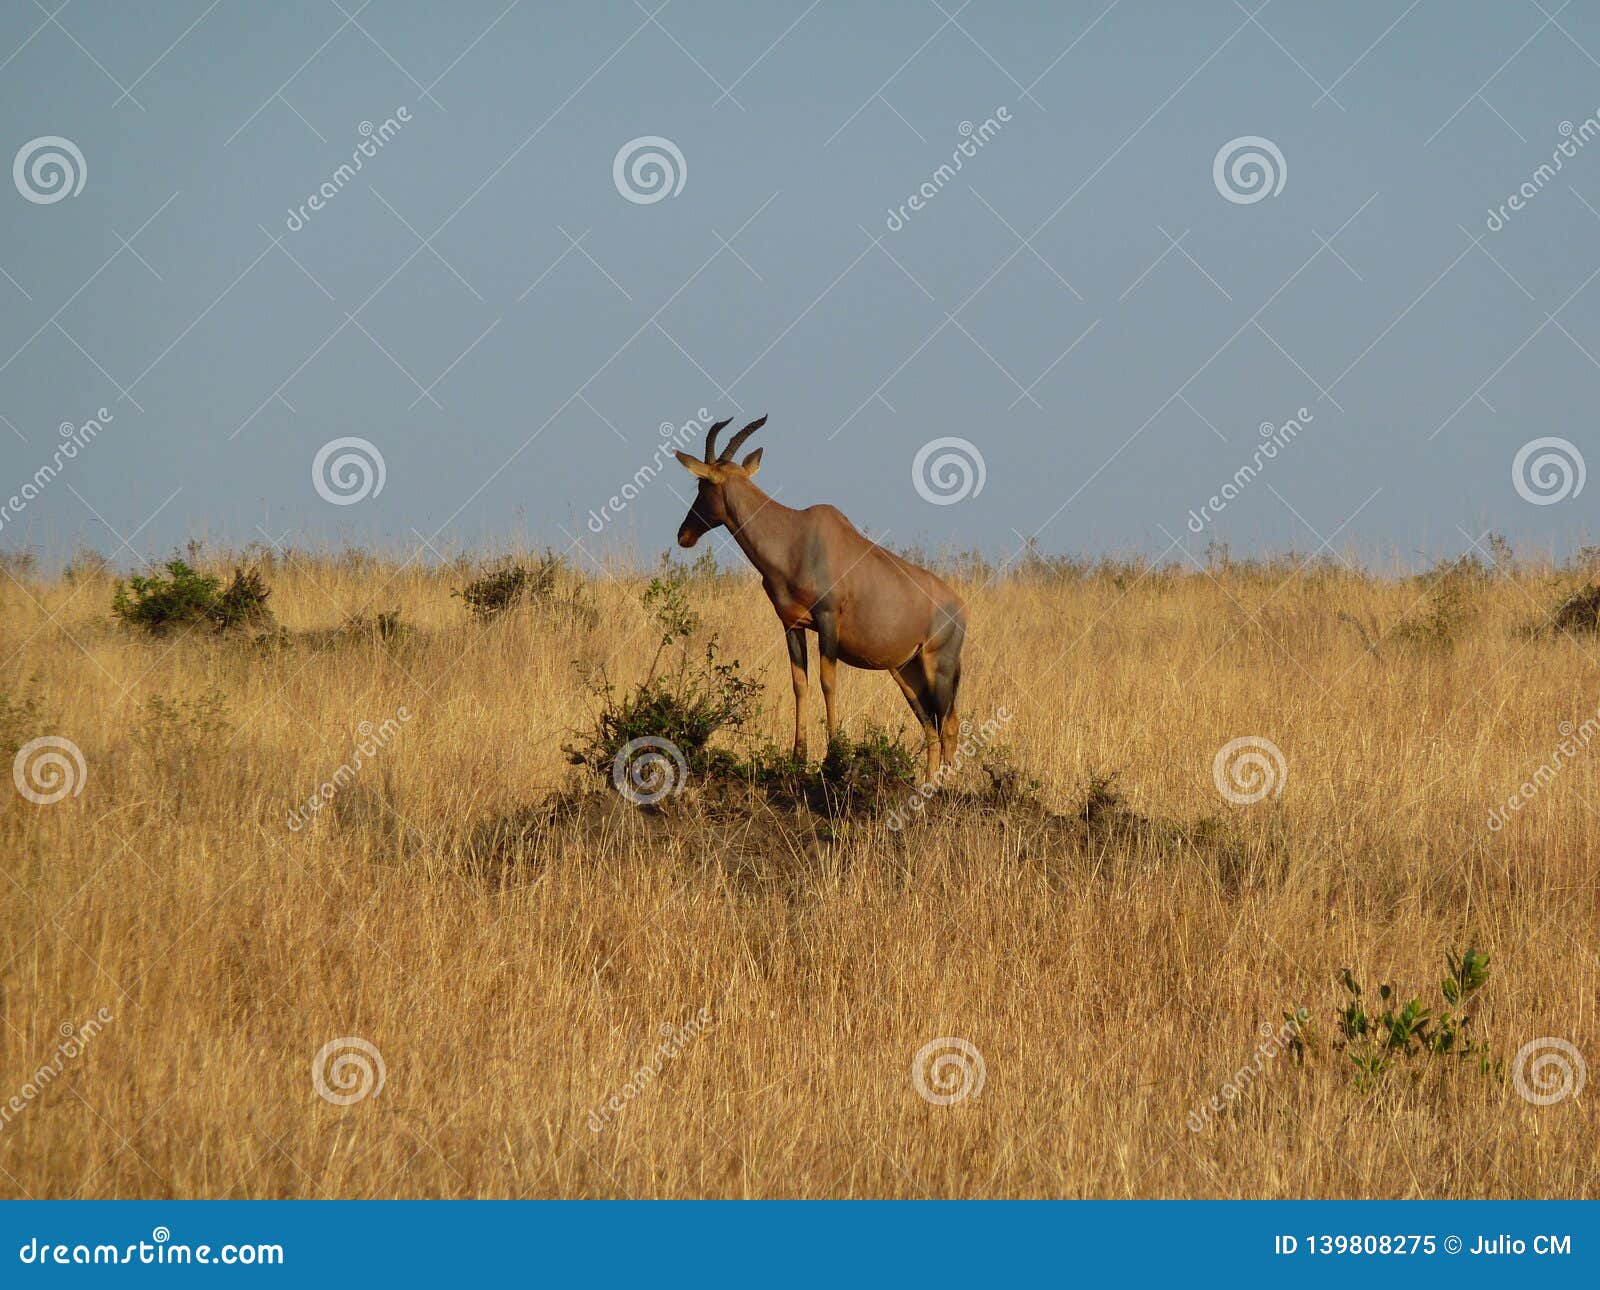 topi antelope damaliscus lunatus